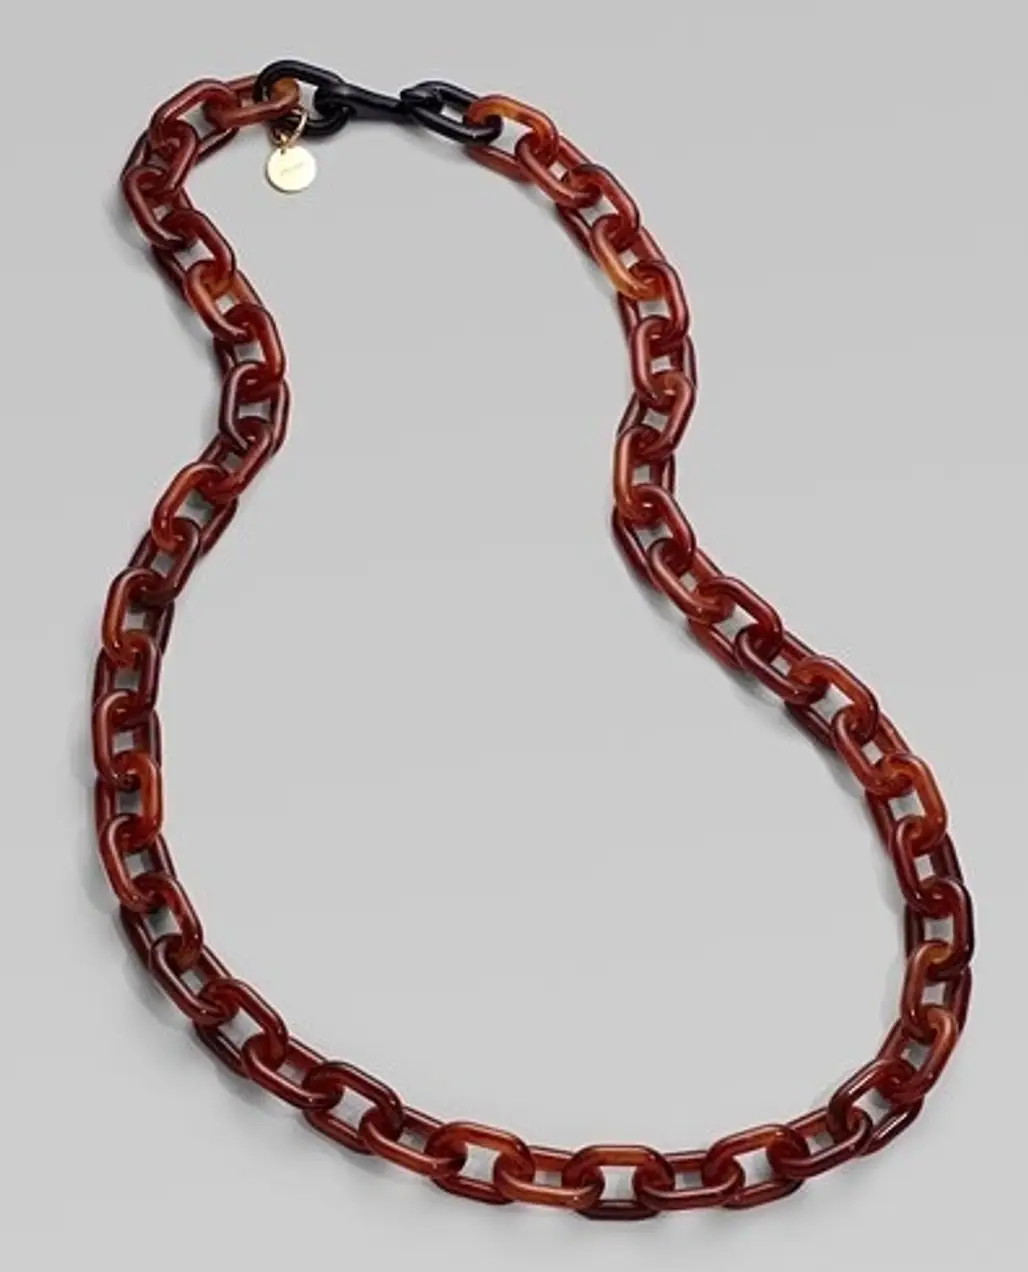 Prada Plex Chain Link Necklace